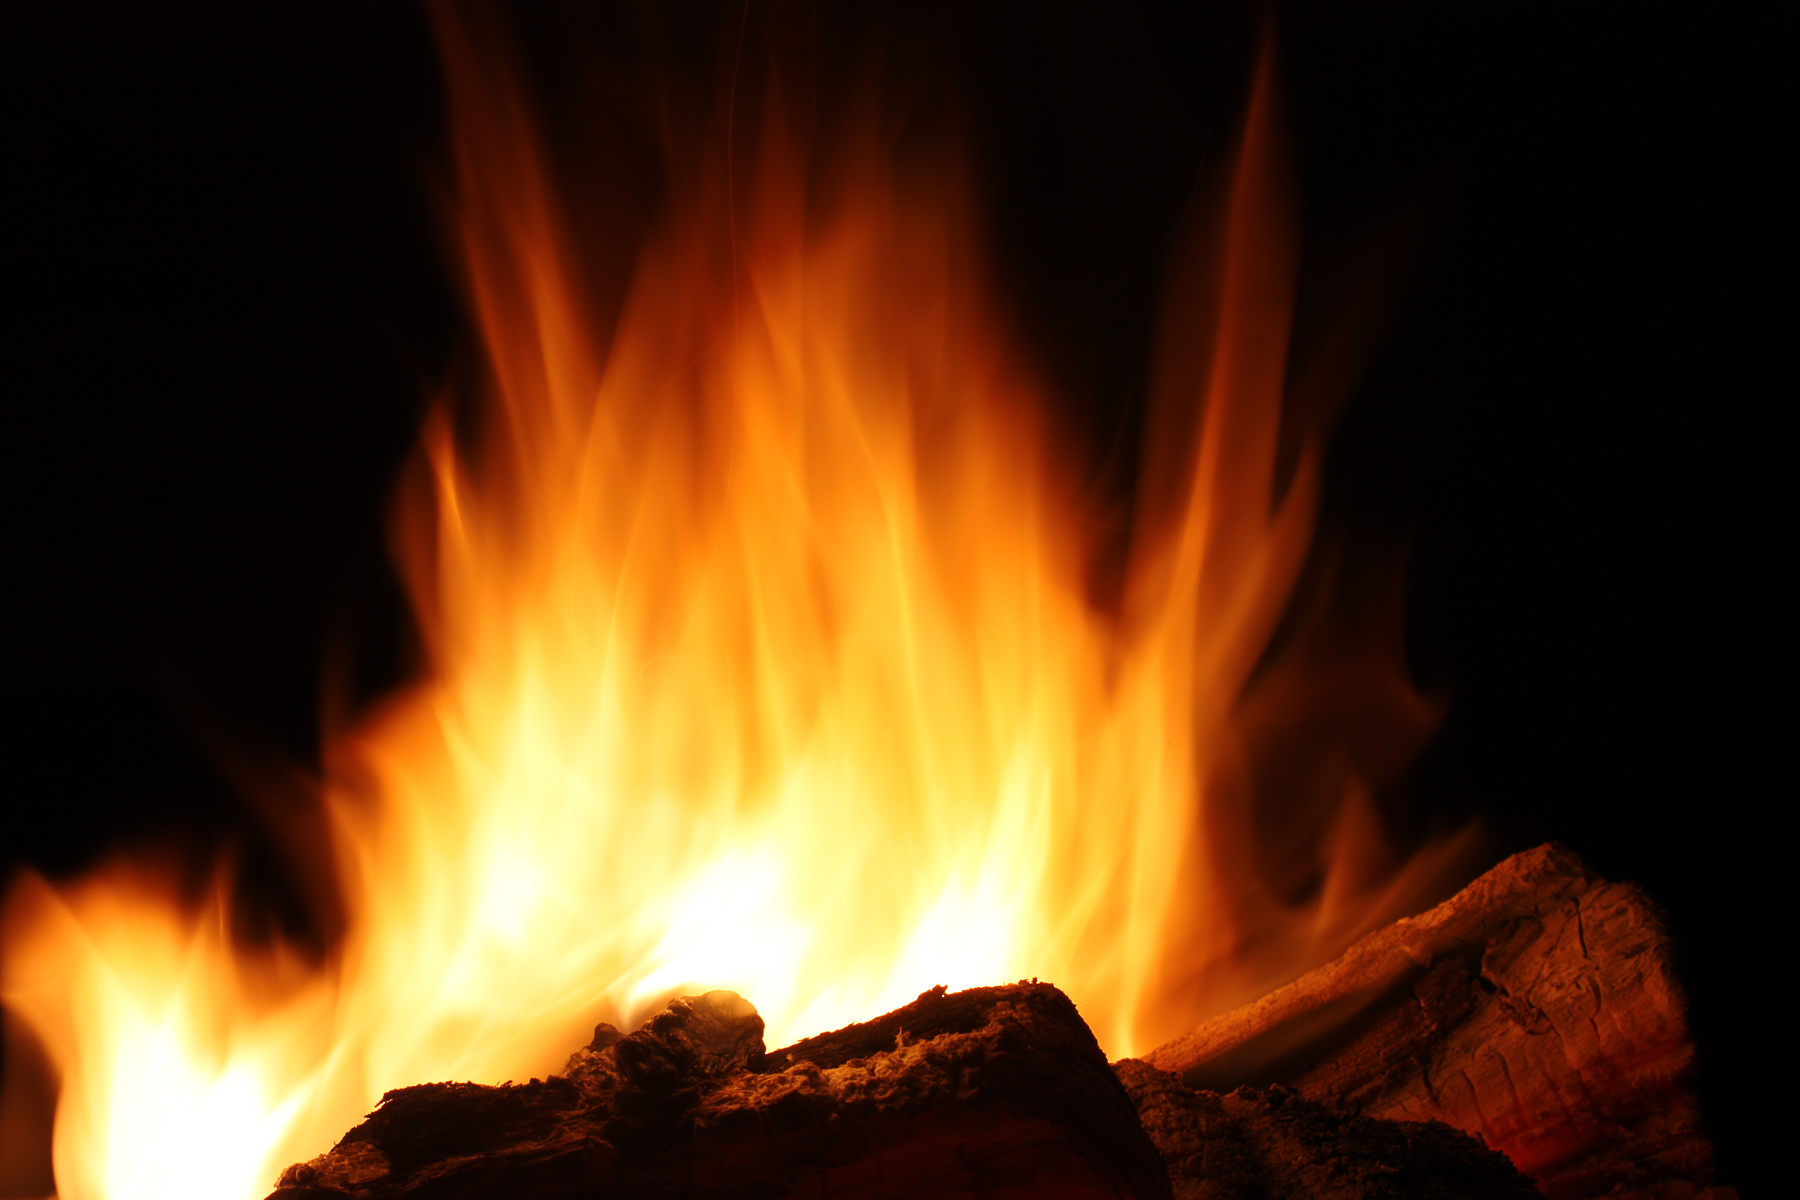 Burning campfire photo